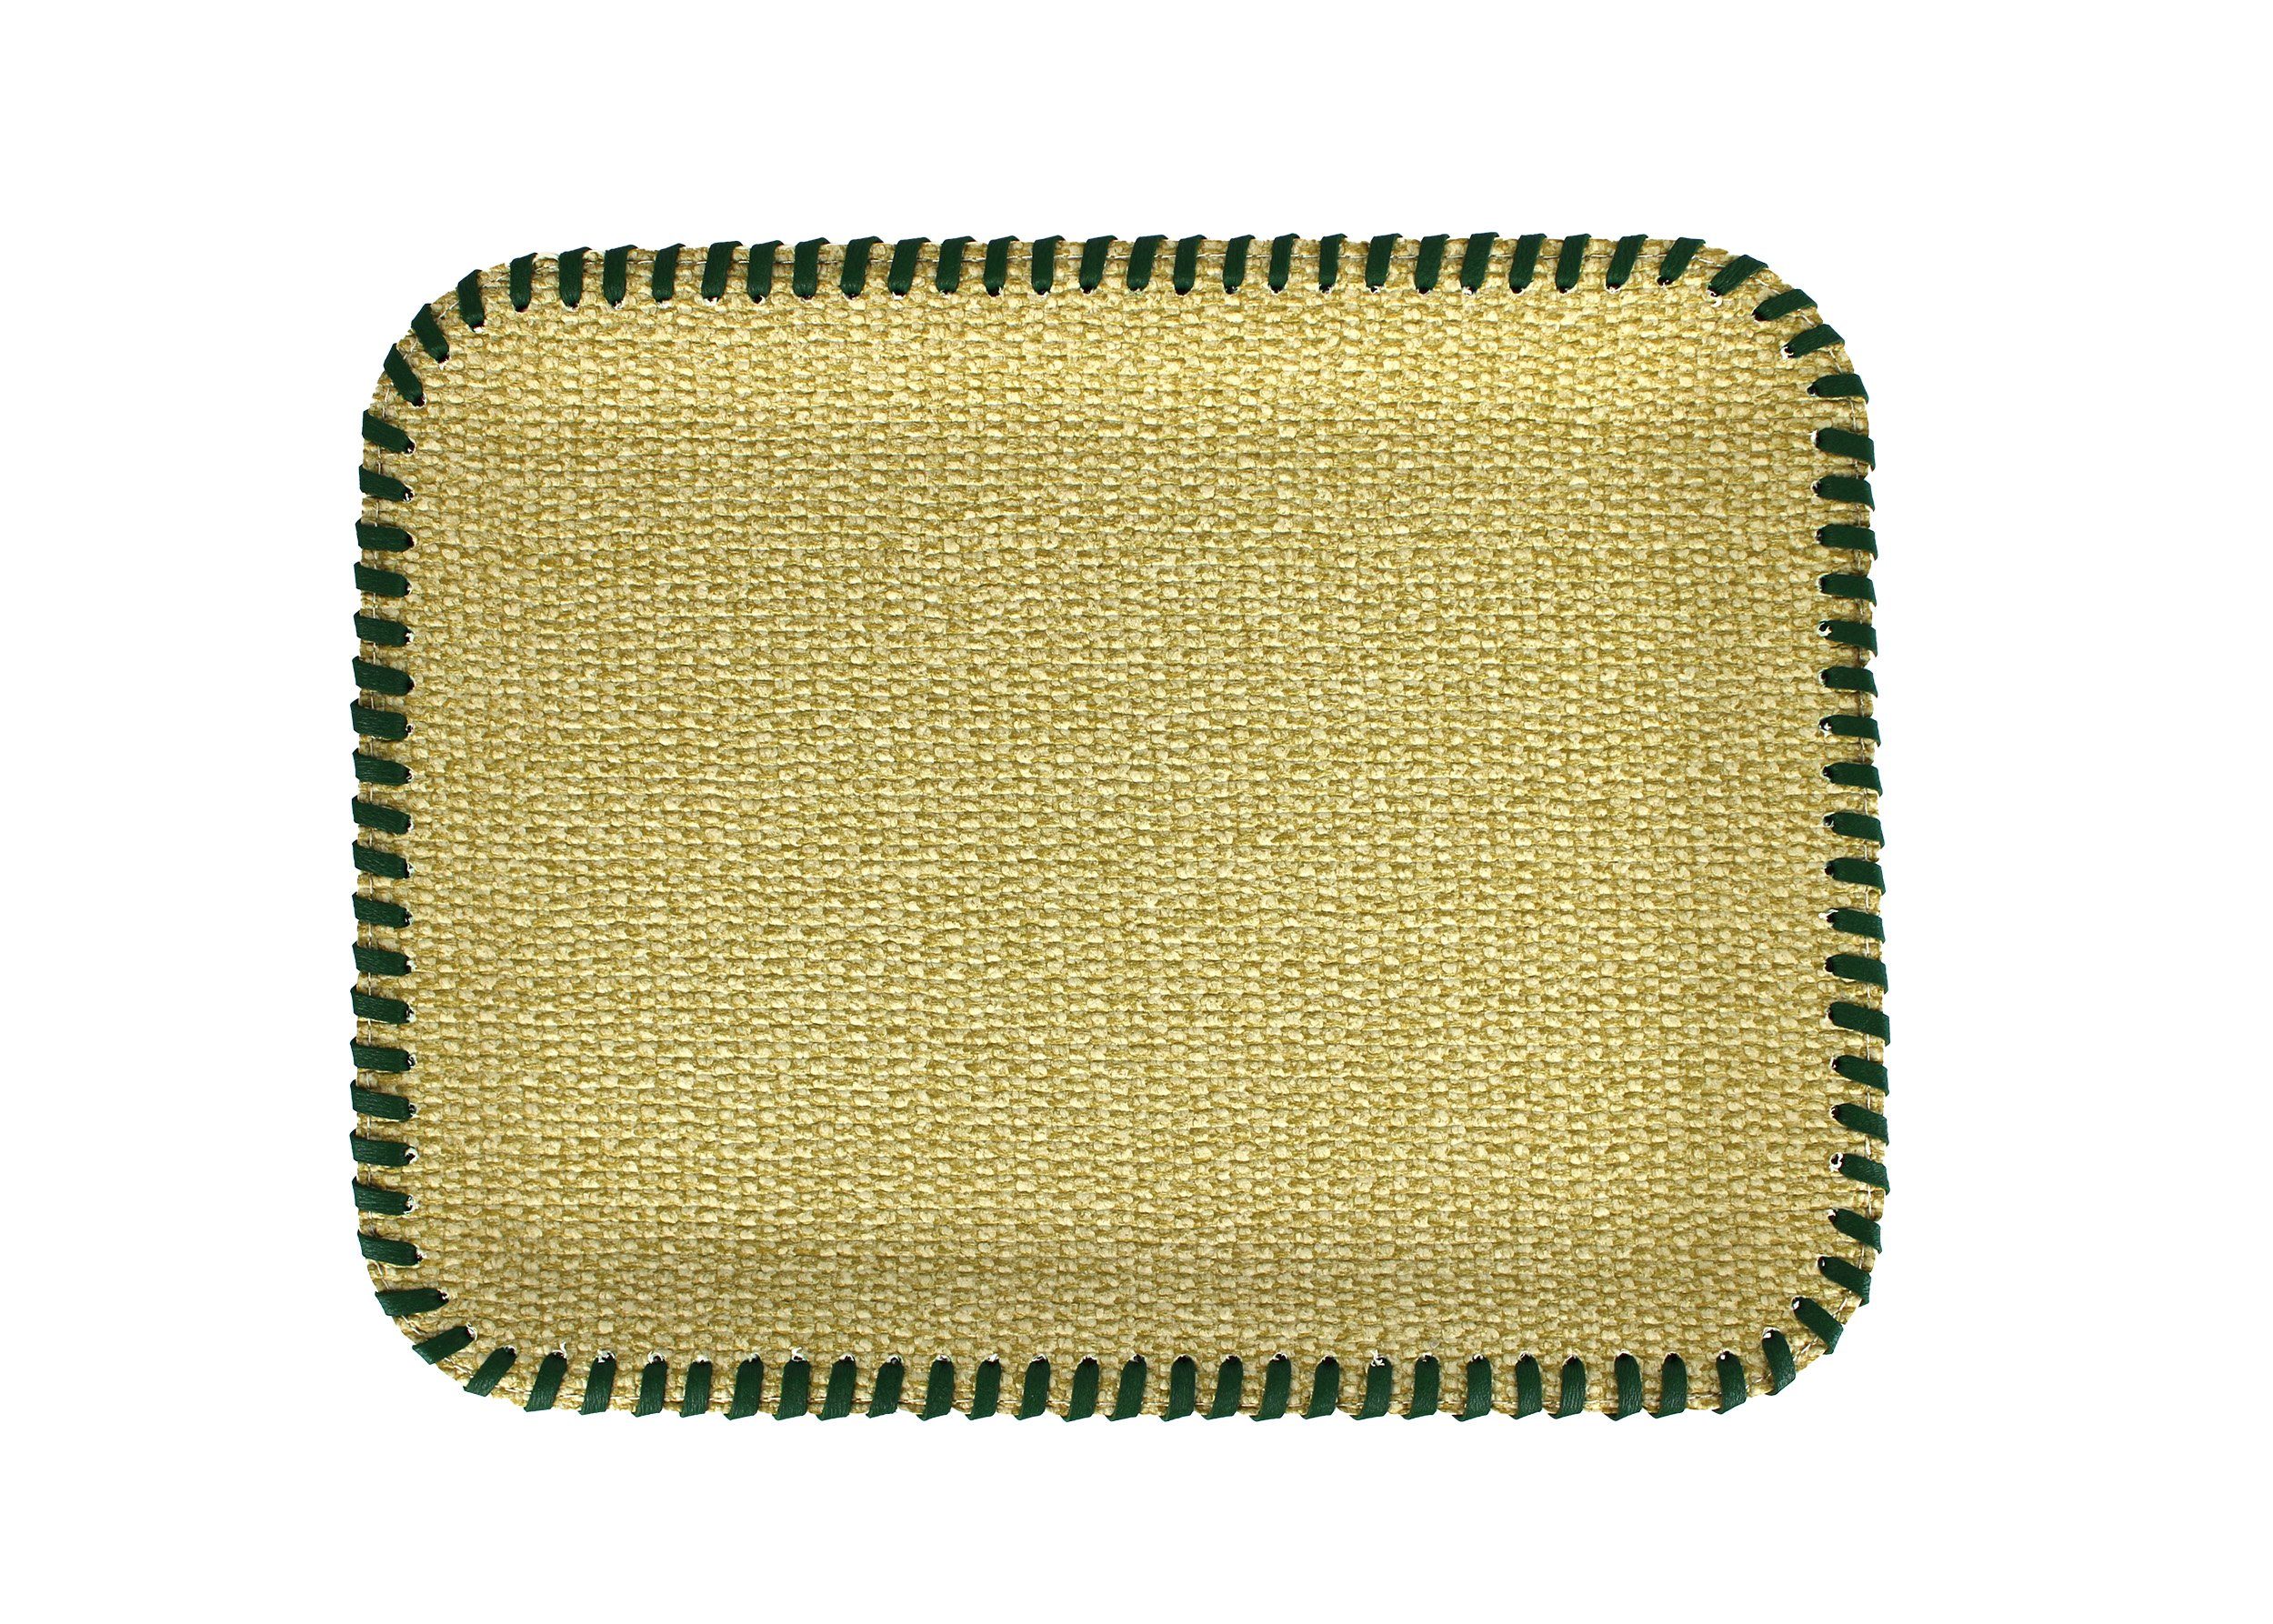 Signature Home Collection Tablett Tablett flach mit Lederband für Kaffee Tee Serviertablett, Kunstleder, (1 Stück, 1x Tablett), rutschfest, feucht abwischbar grün